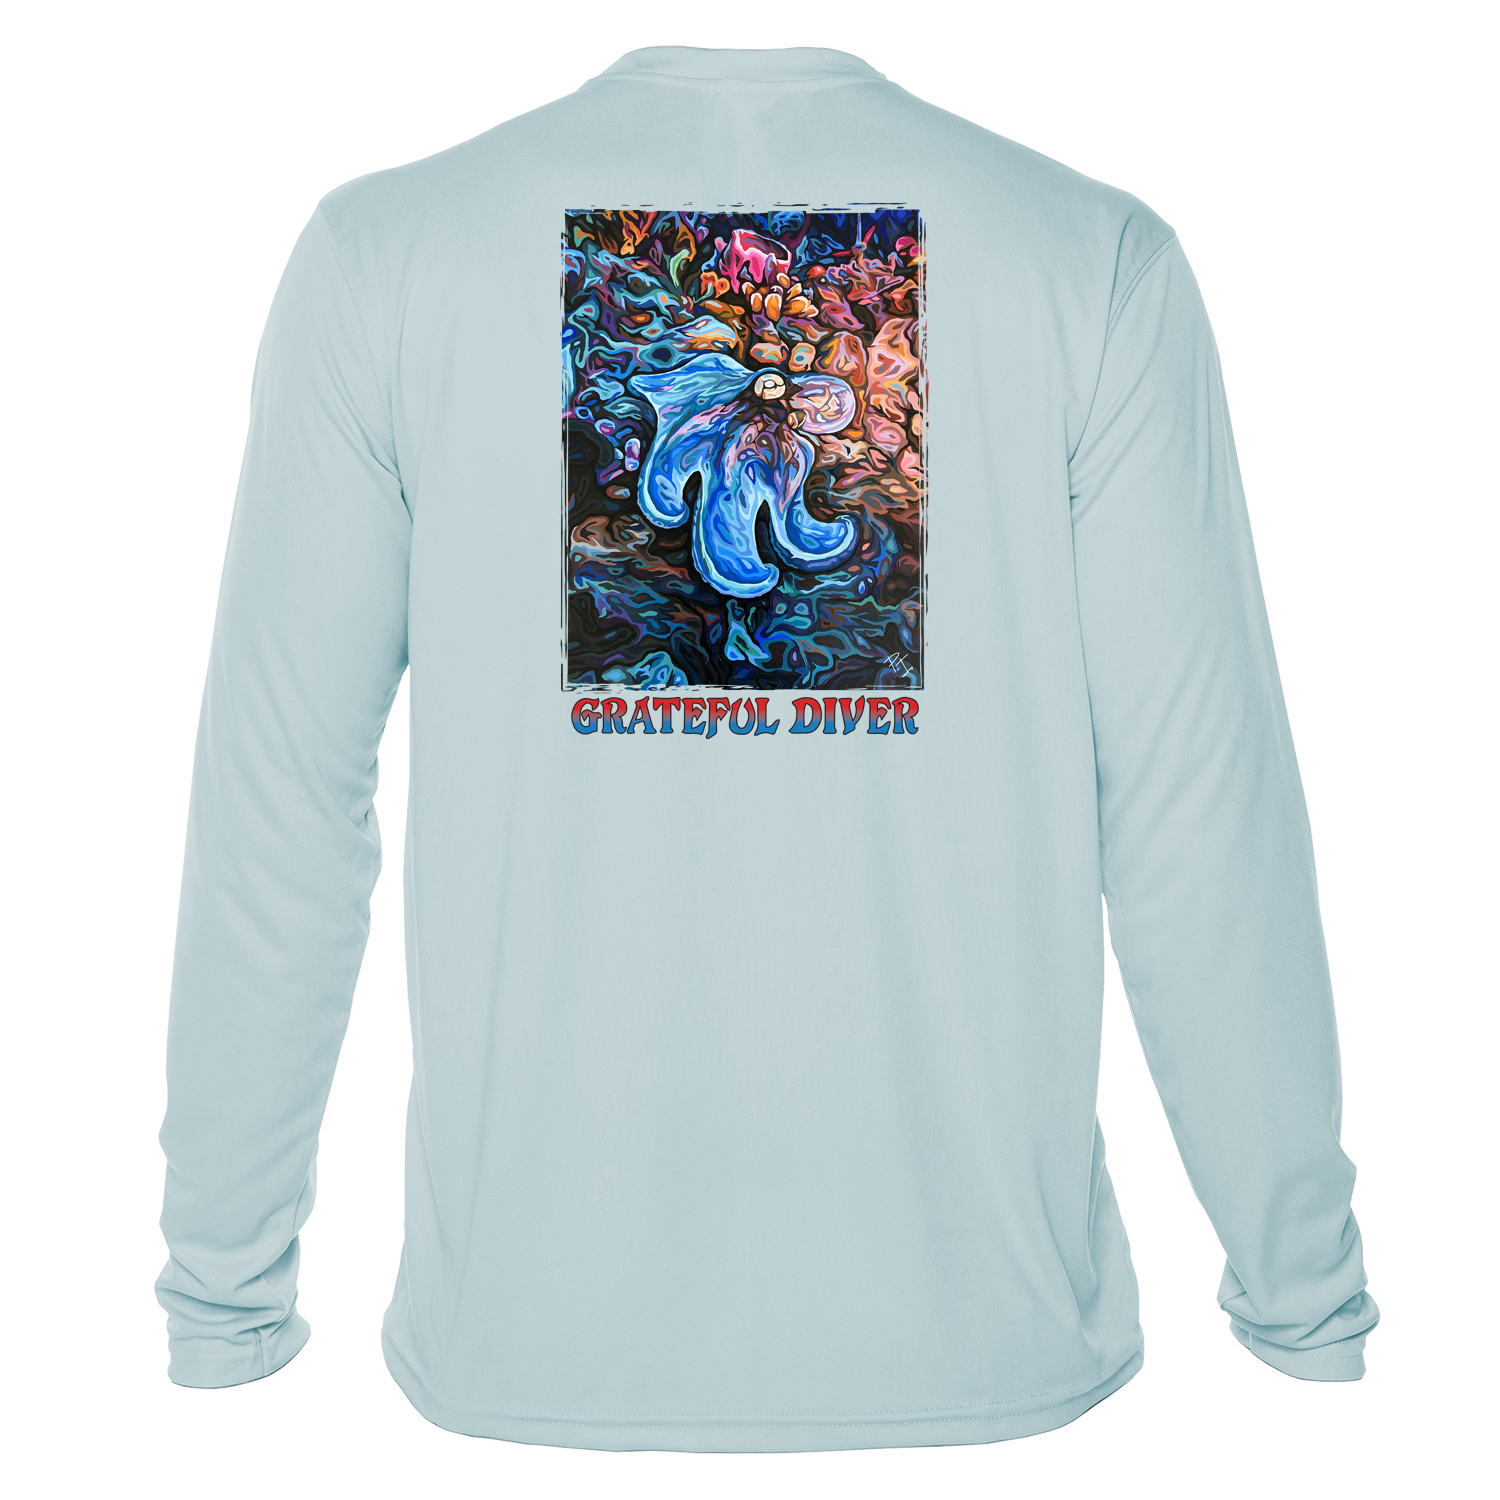 Grateful Diver Artist's Collection by Irina Pushkareva: Caribbean Reef Octopus UV Shirt in arctic blue back shot off figure